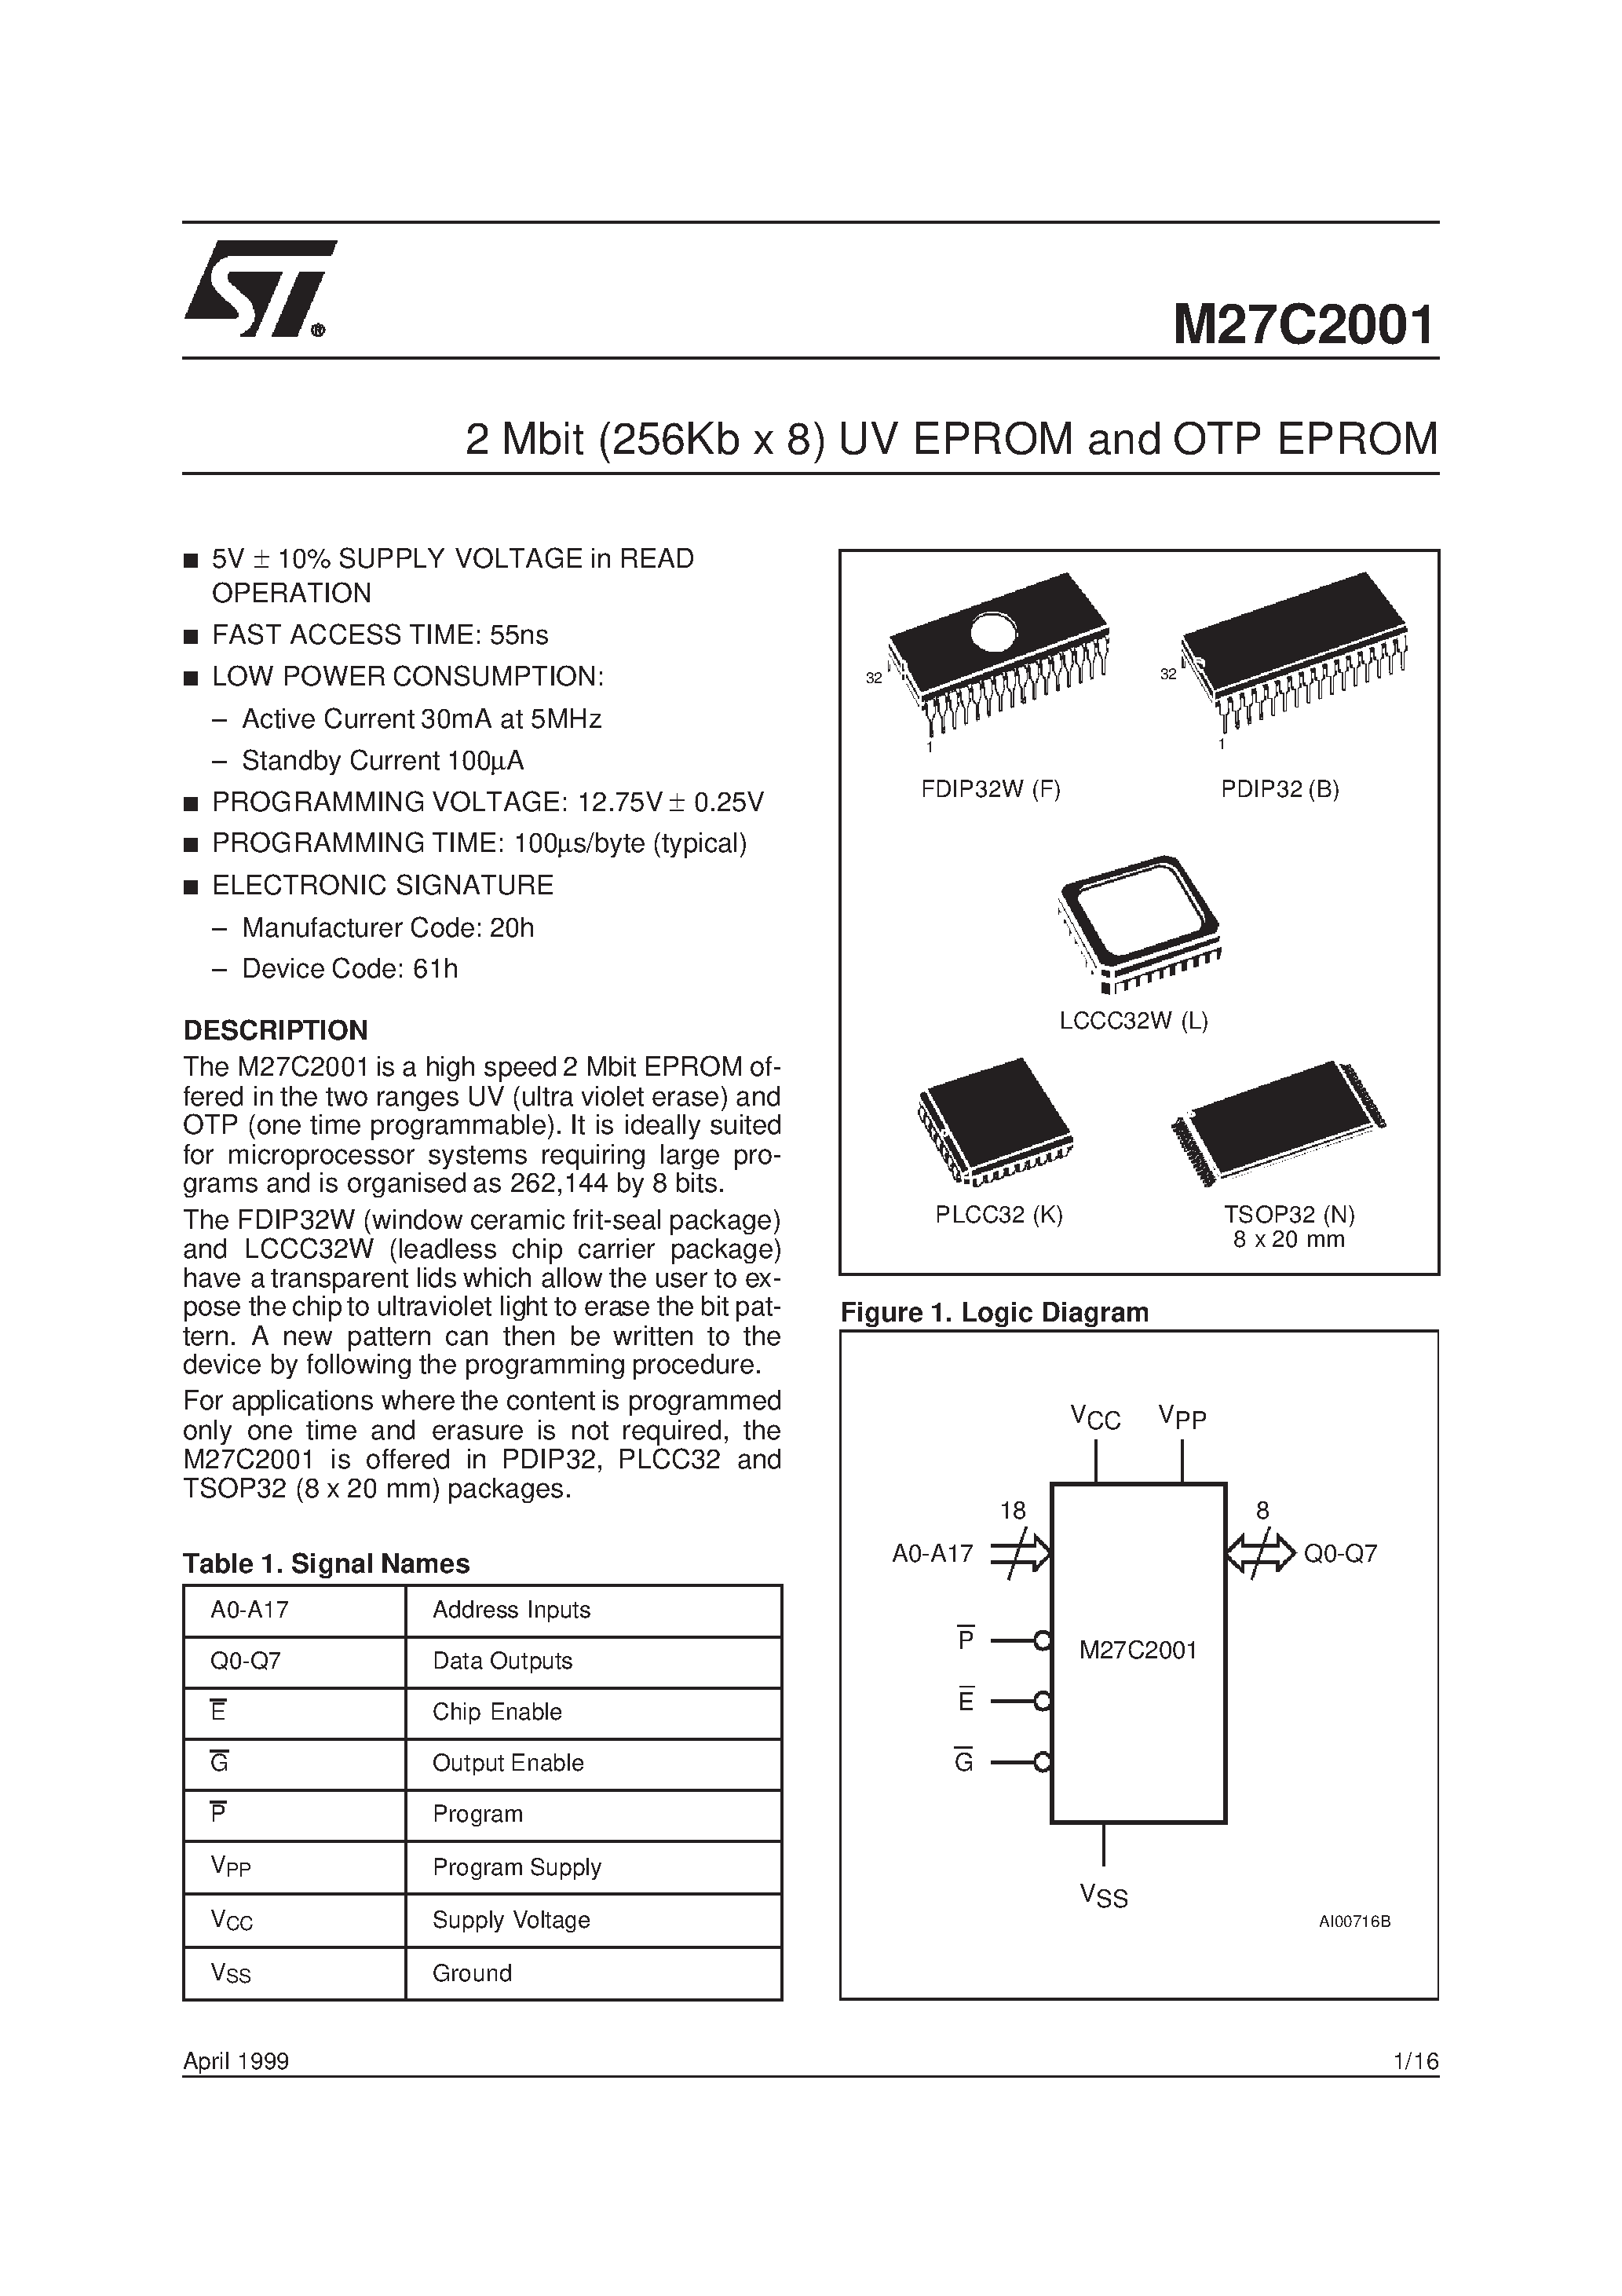 Datasheet M27C2001-10F6TR - 2 Mbit 256Kb x 8 UV EPROM and OTP EPROM page 1